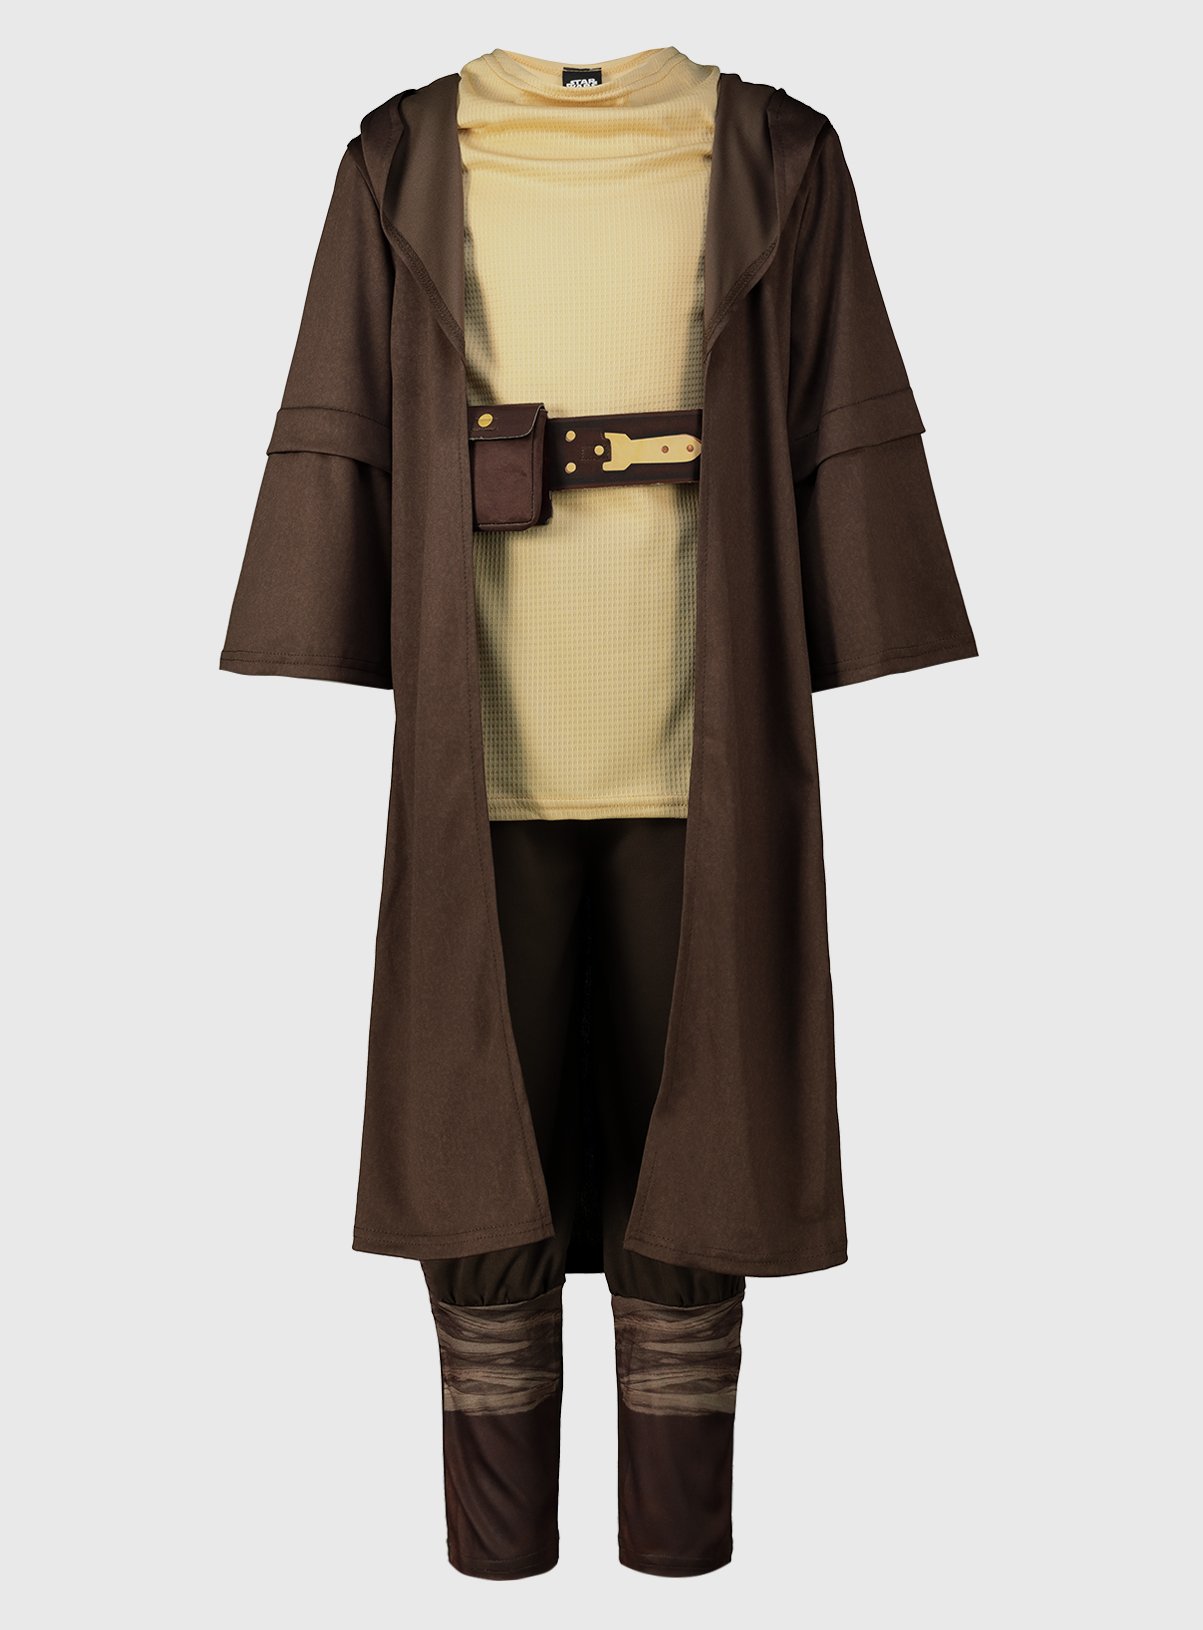 Buy Star Wars Obi Wan Kenobi Costume - 5-6 years